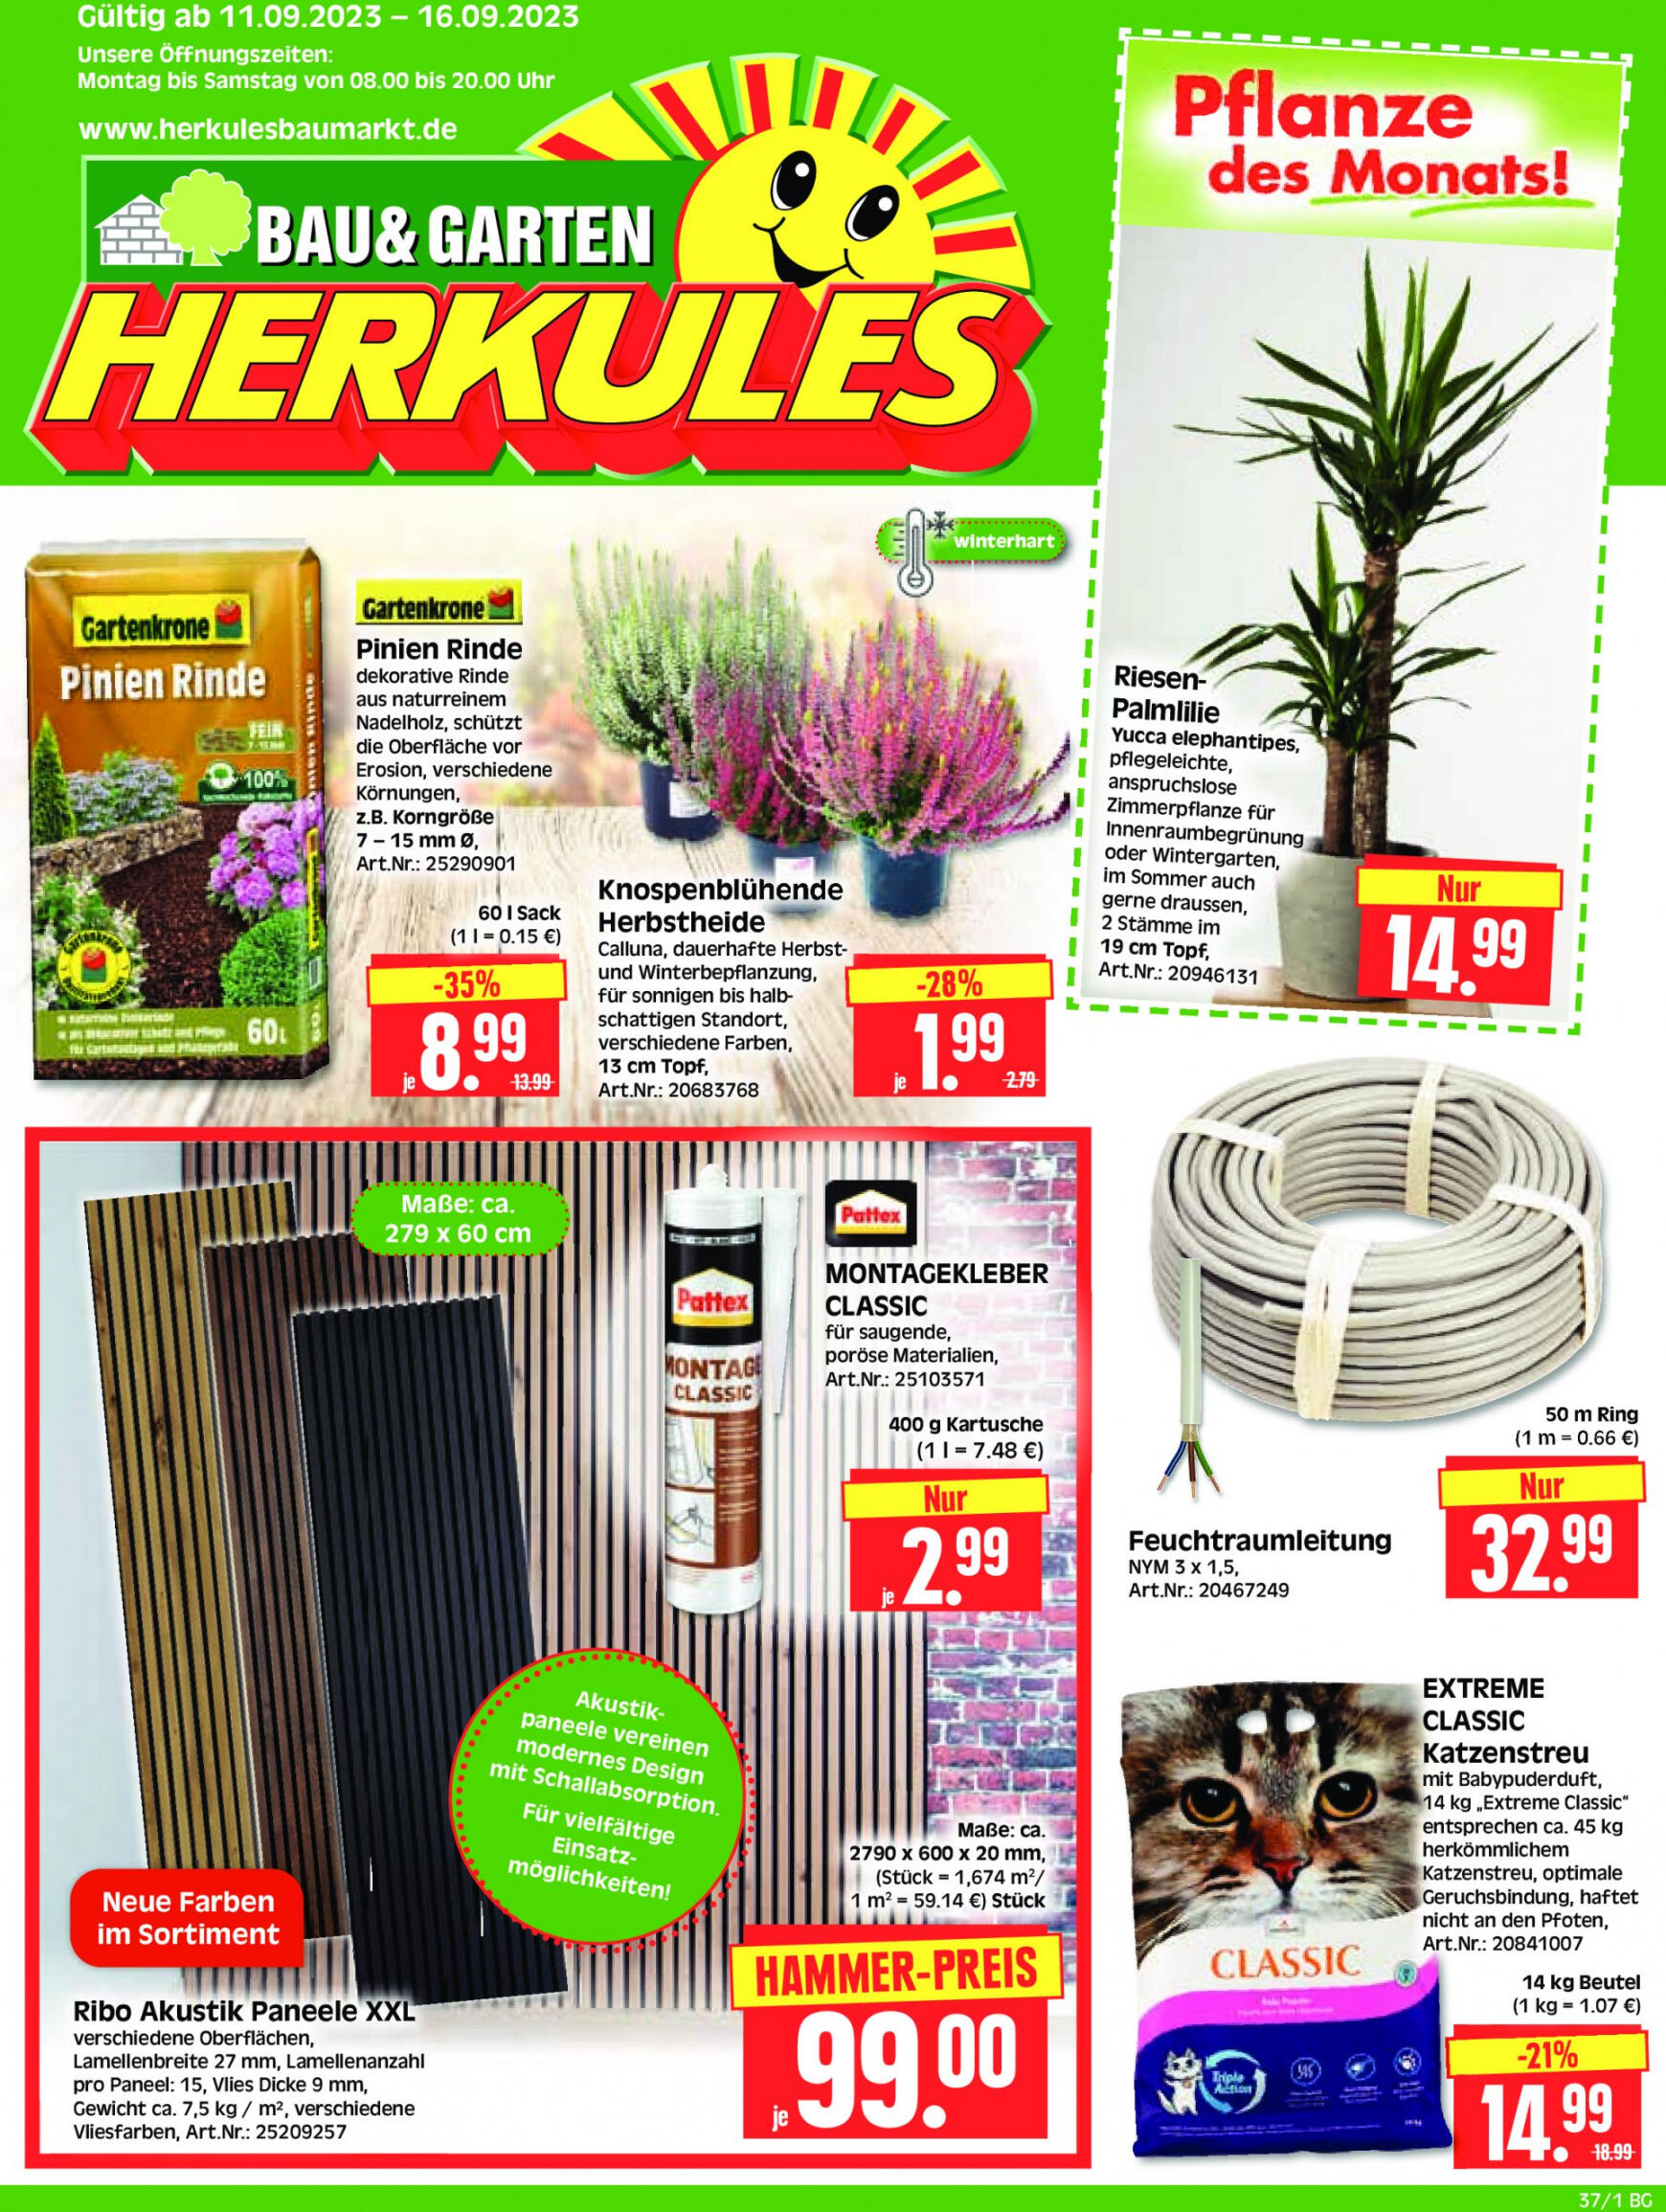 herkules - Herkules - Bau & Garten - page: 1